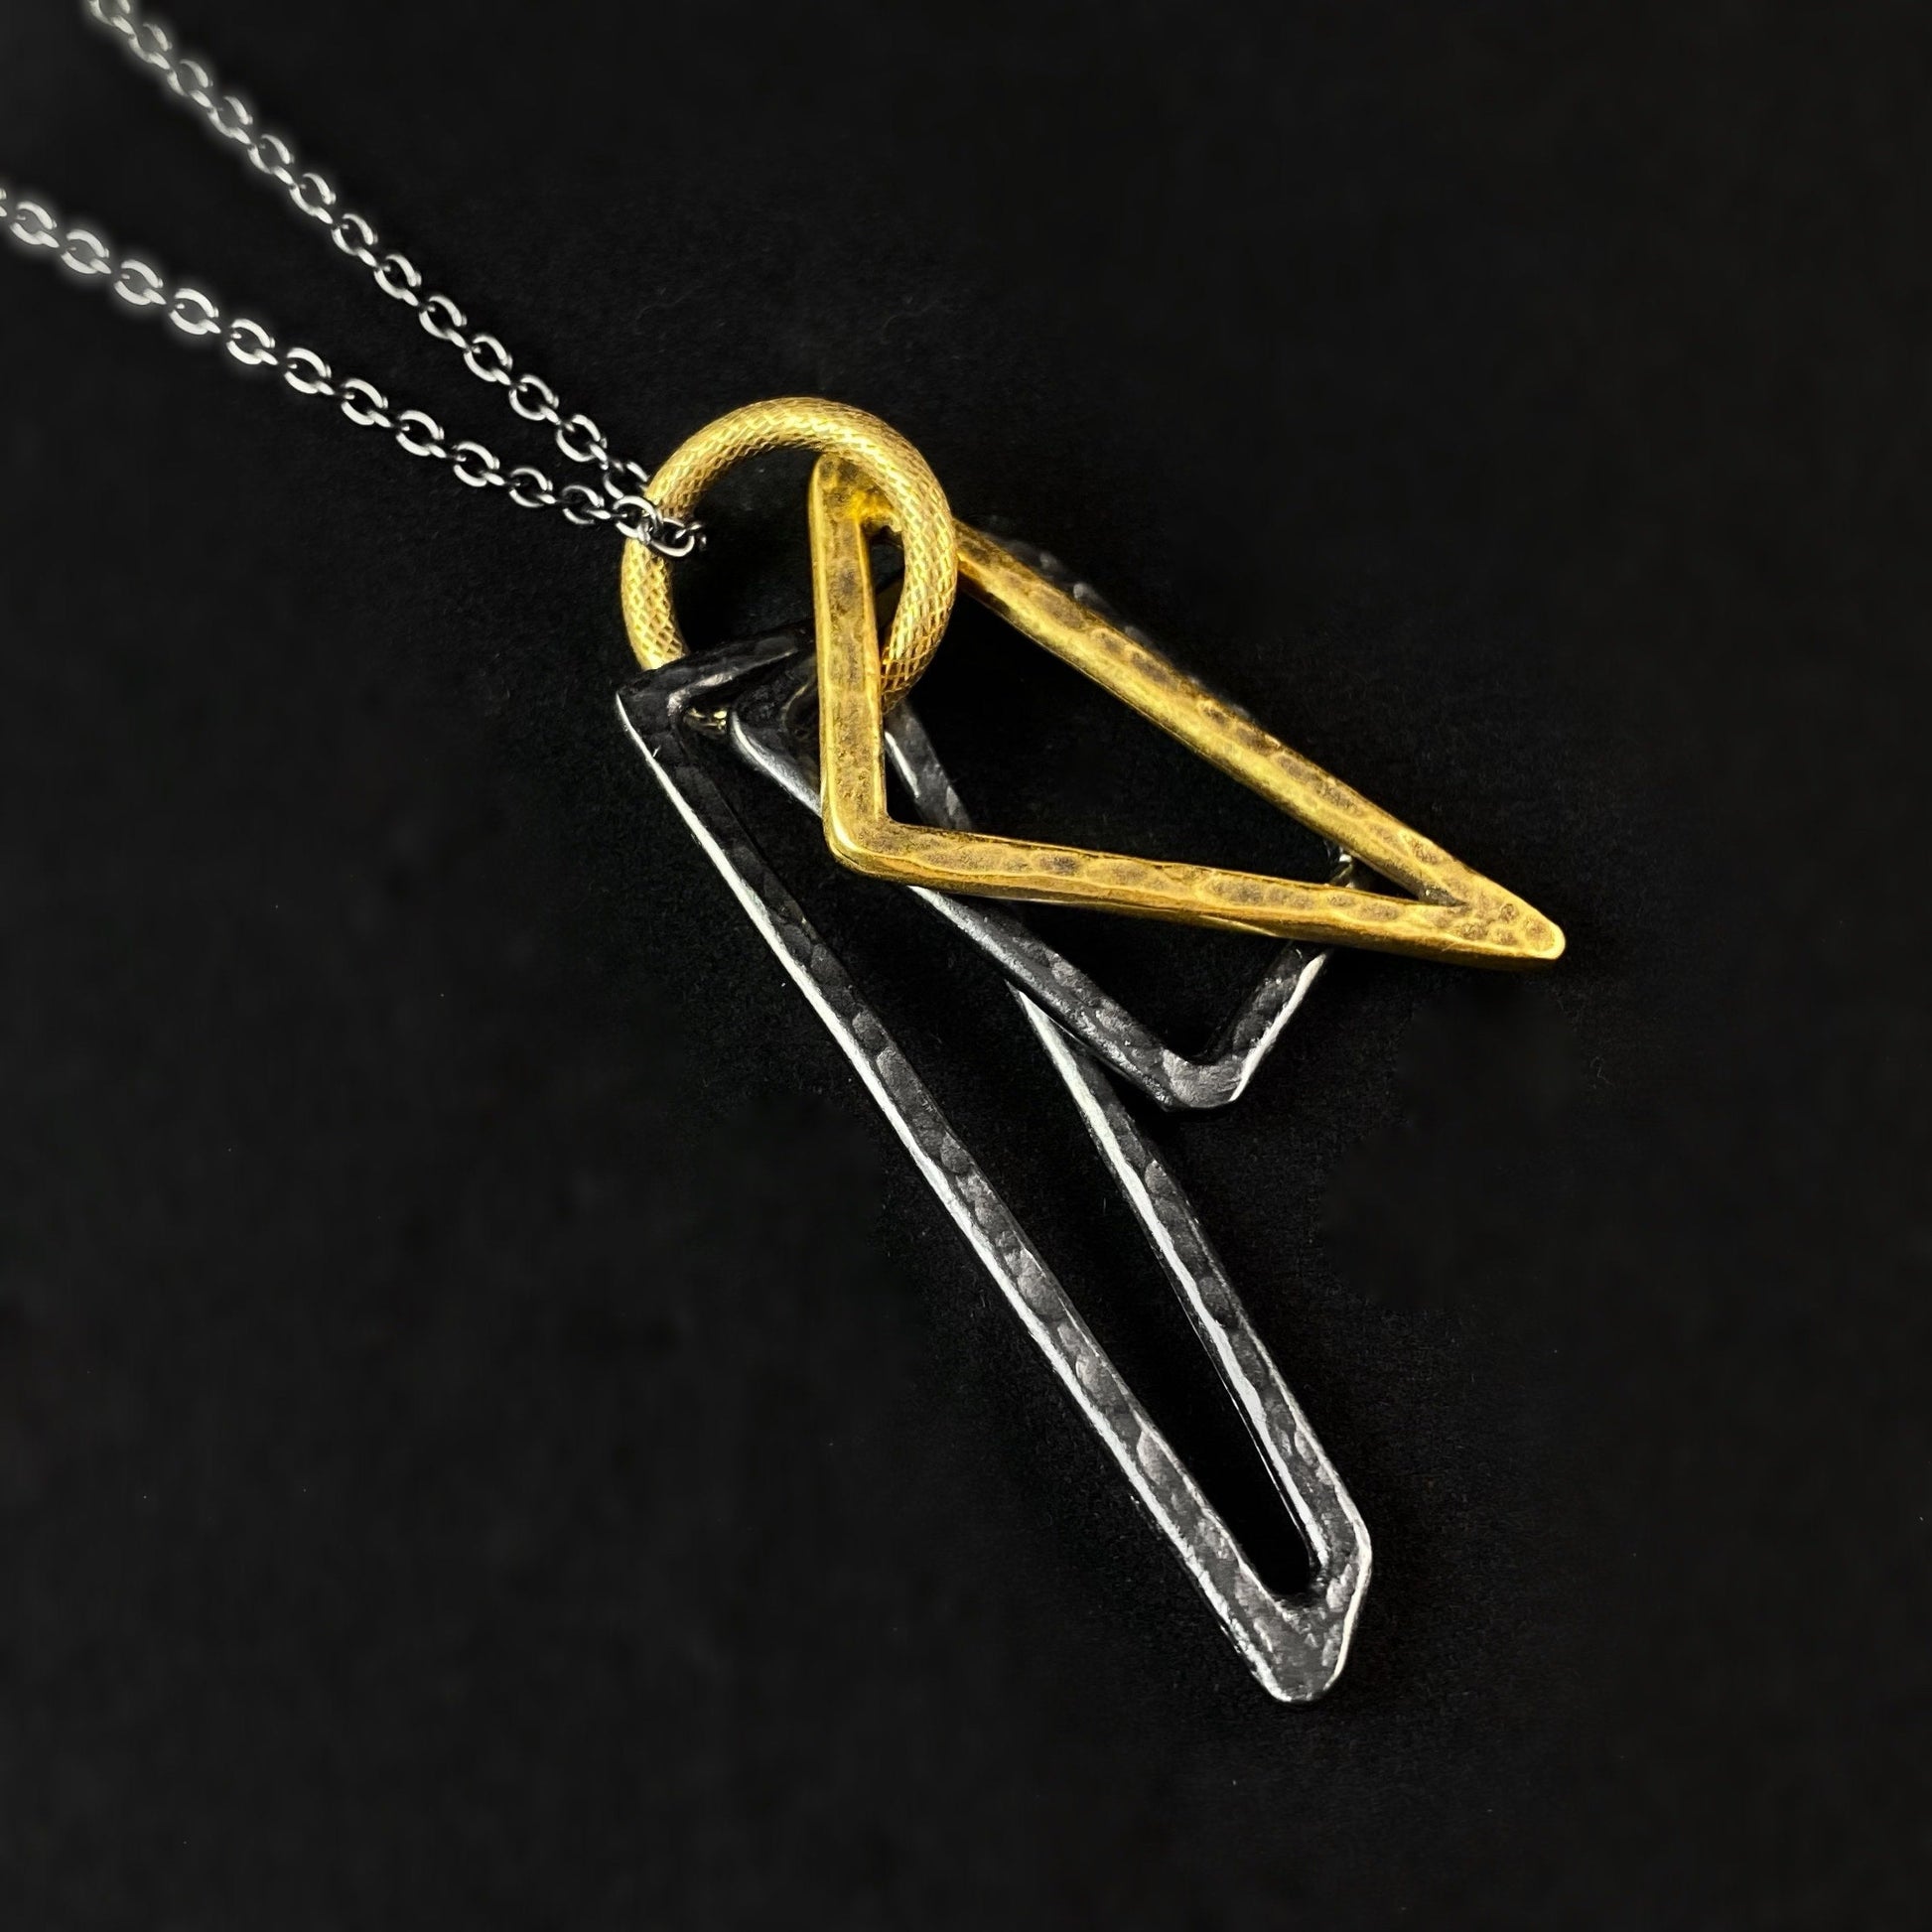 Handmade Geometric Pendant Necklace, Made in USA